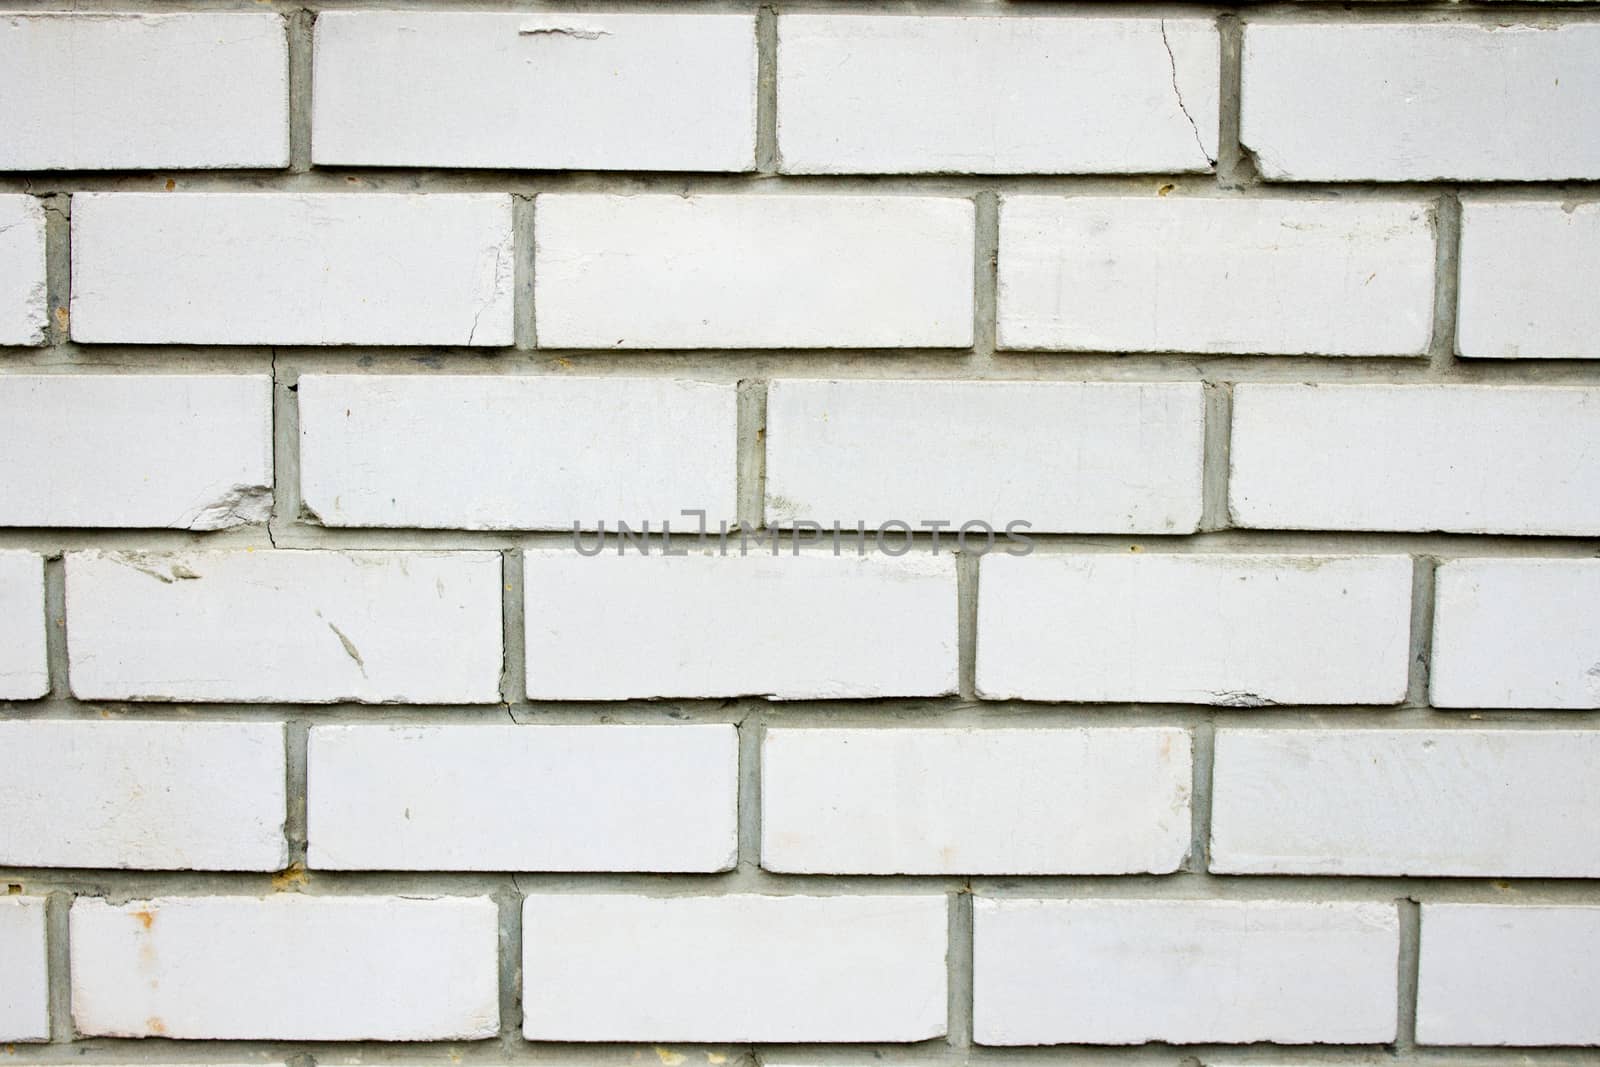 background brick wall of white brick